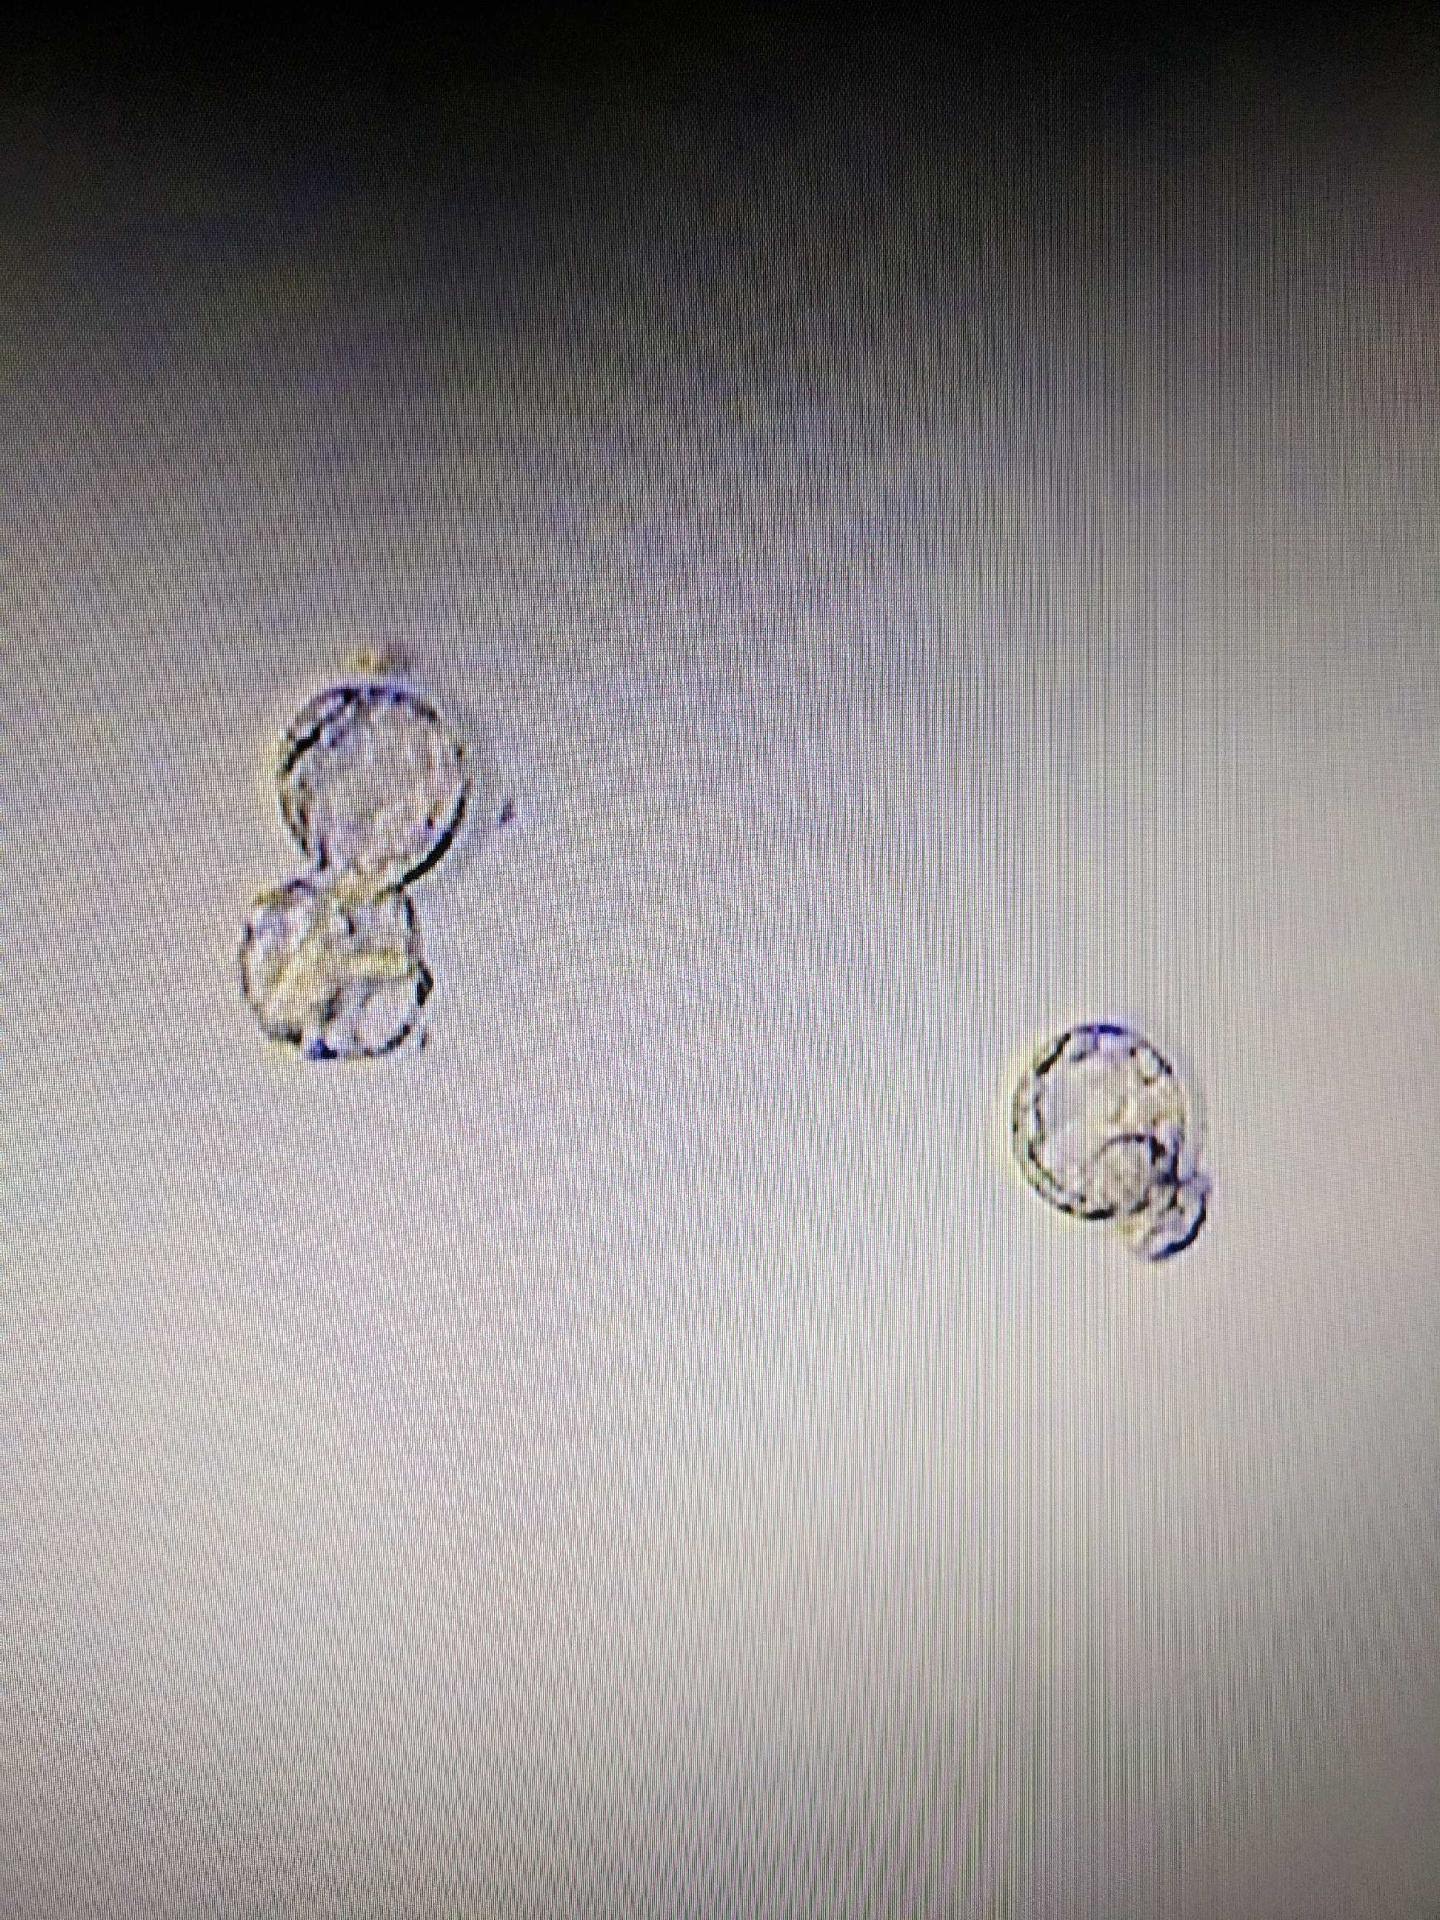 Transferred Embryos